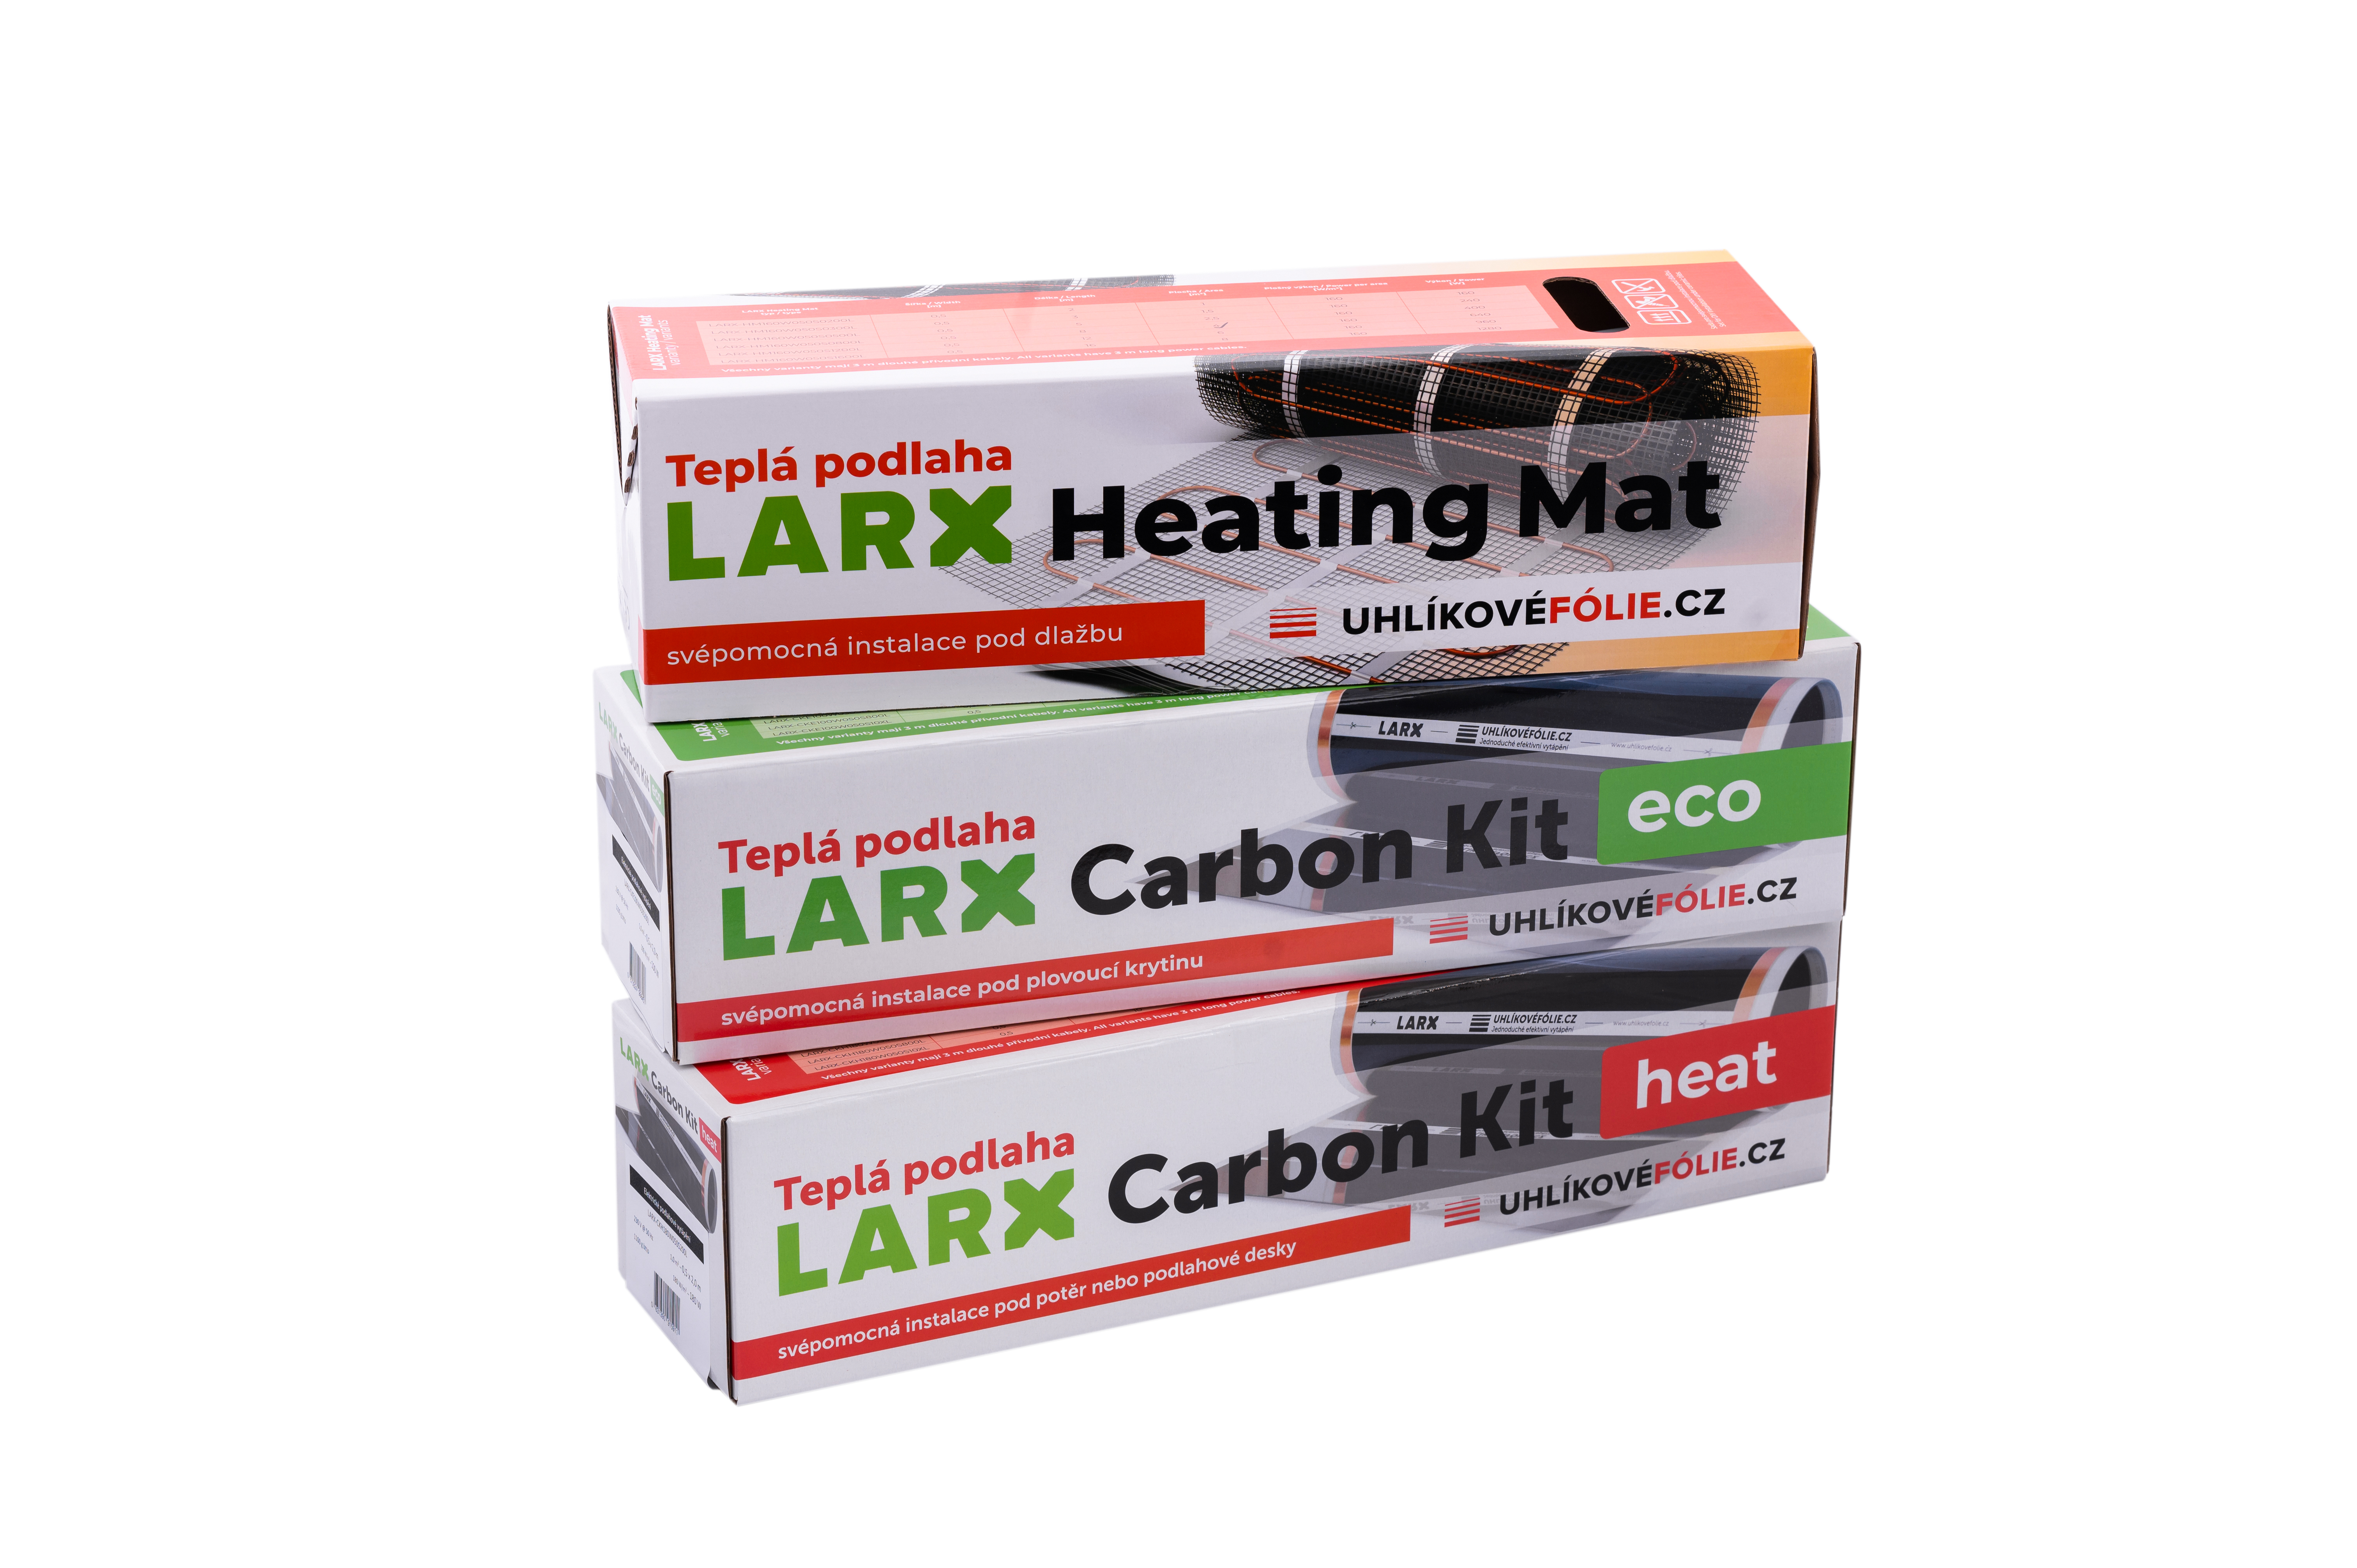 larx carbon kit larx heating mat